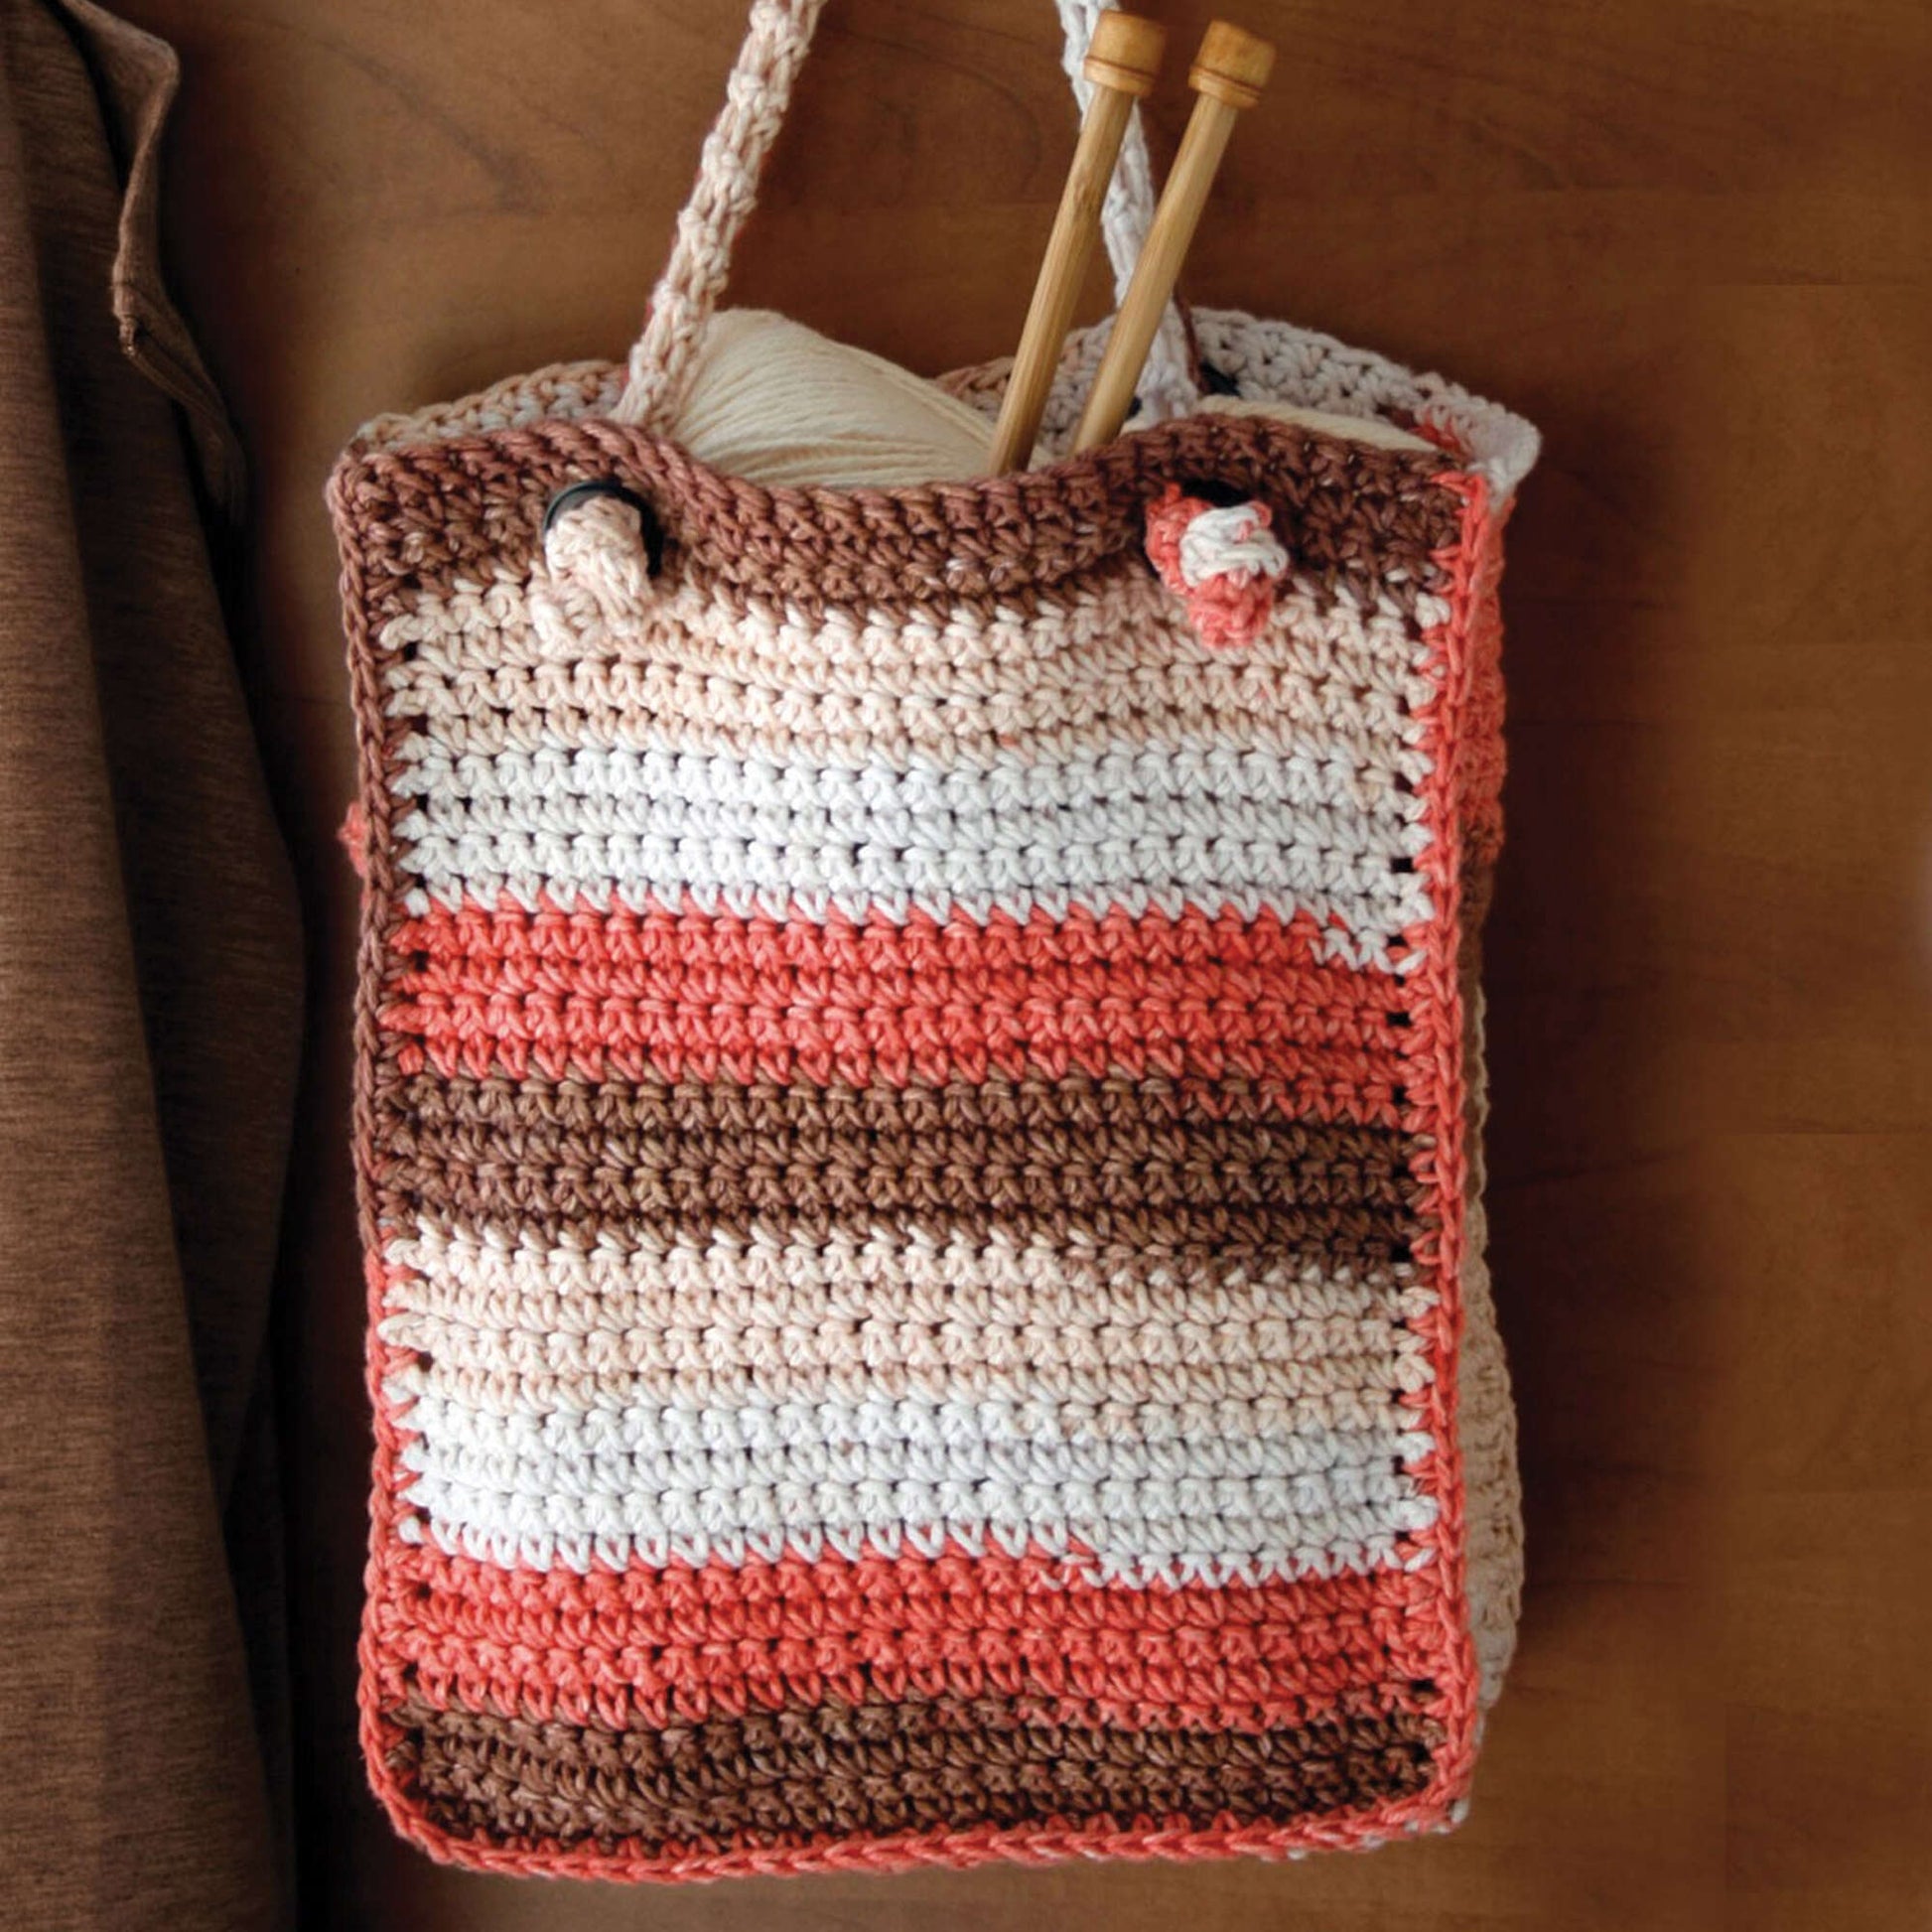 Lily Sugar'N Cream Natural Stripes Yarn - 6 Pack of 57g/2oz - Cotton - 4  Medium (Worsted) - 95 Yards - Knitting/Crochet